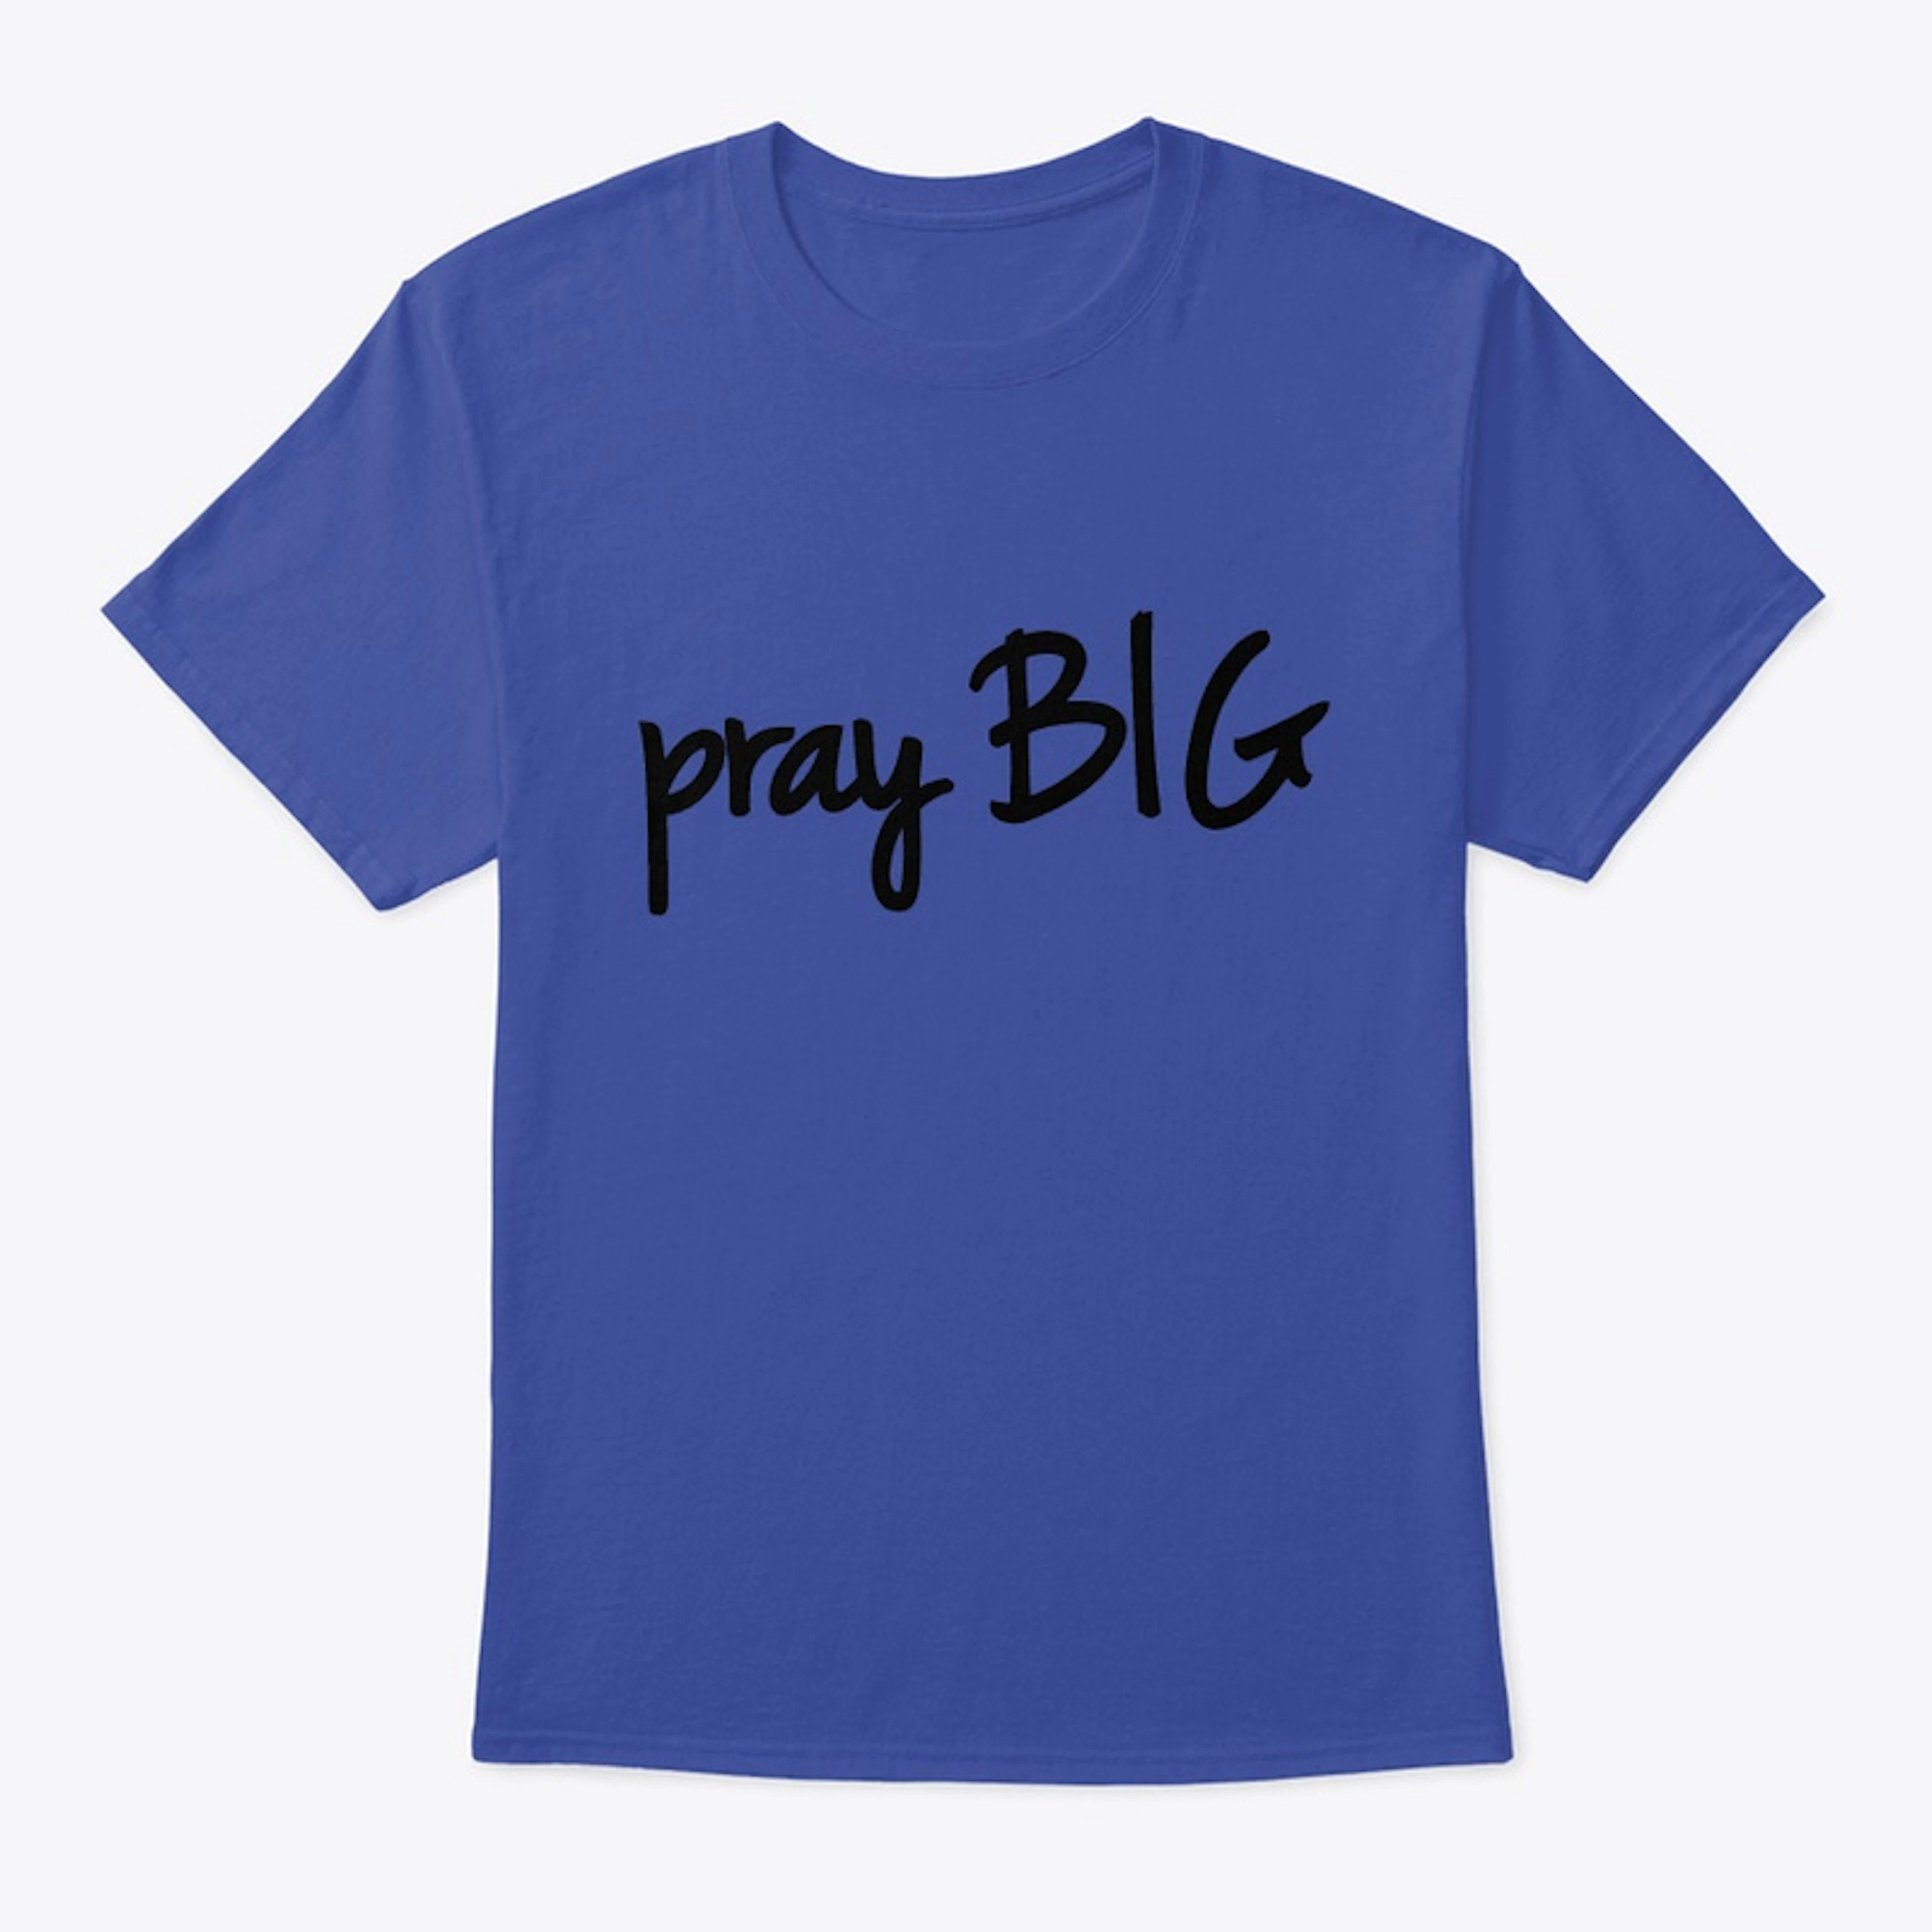 pray BIG